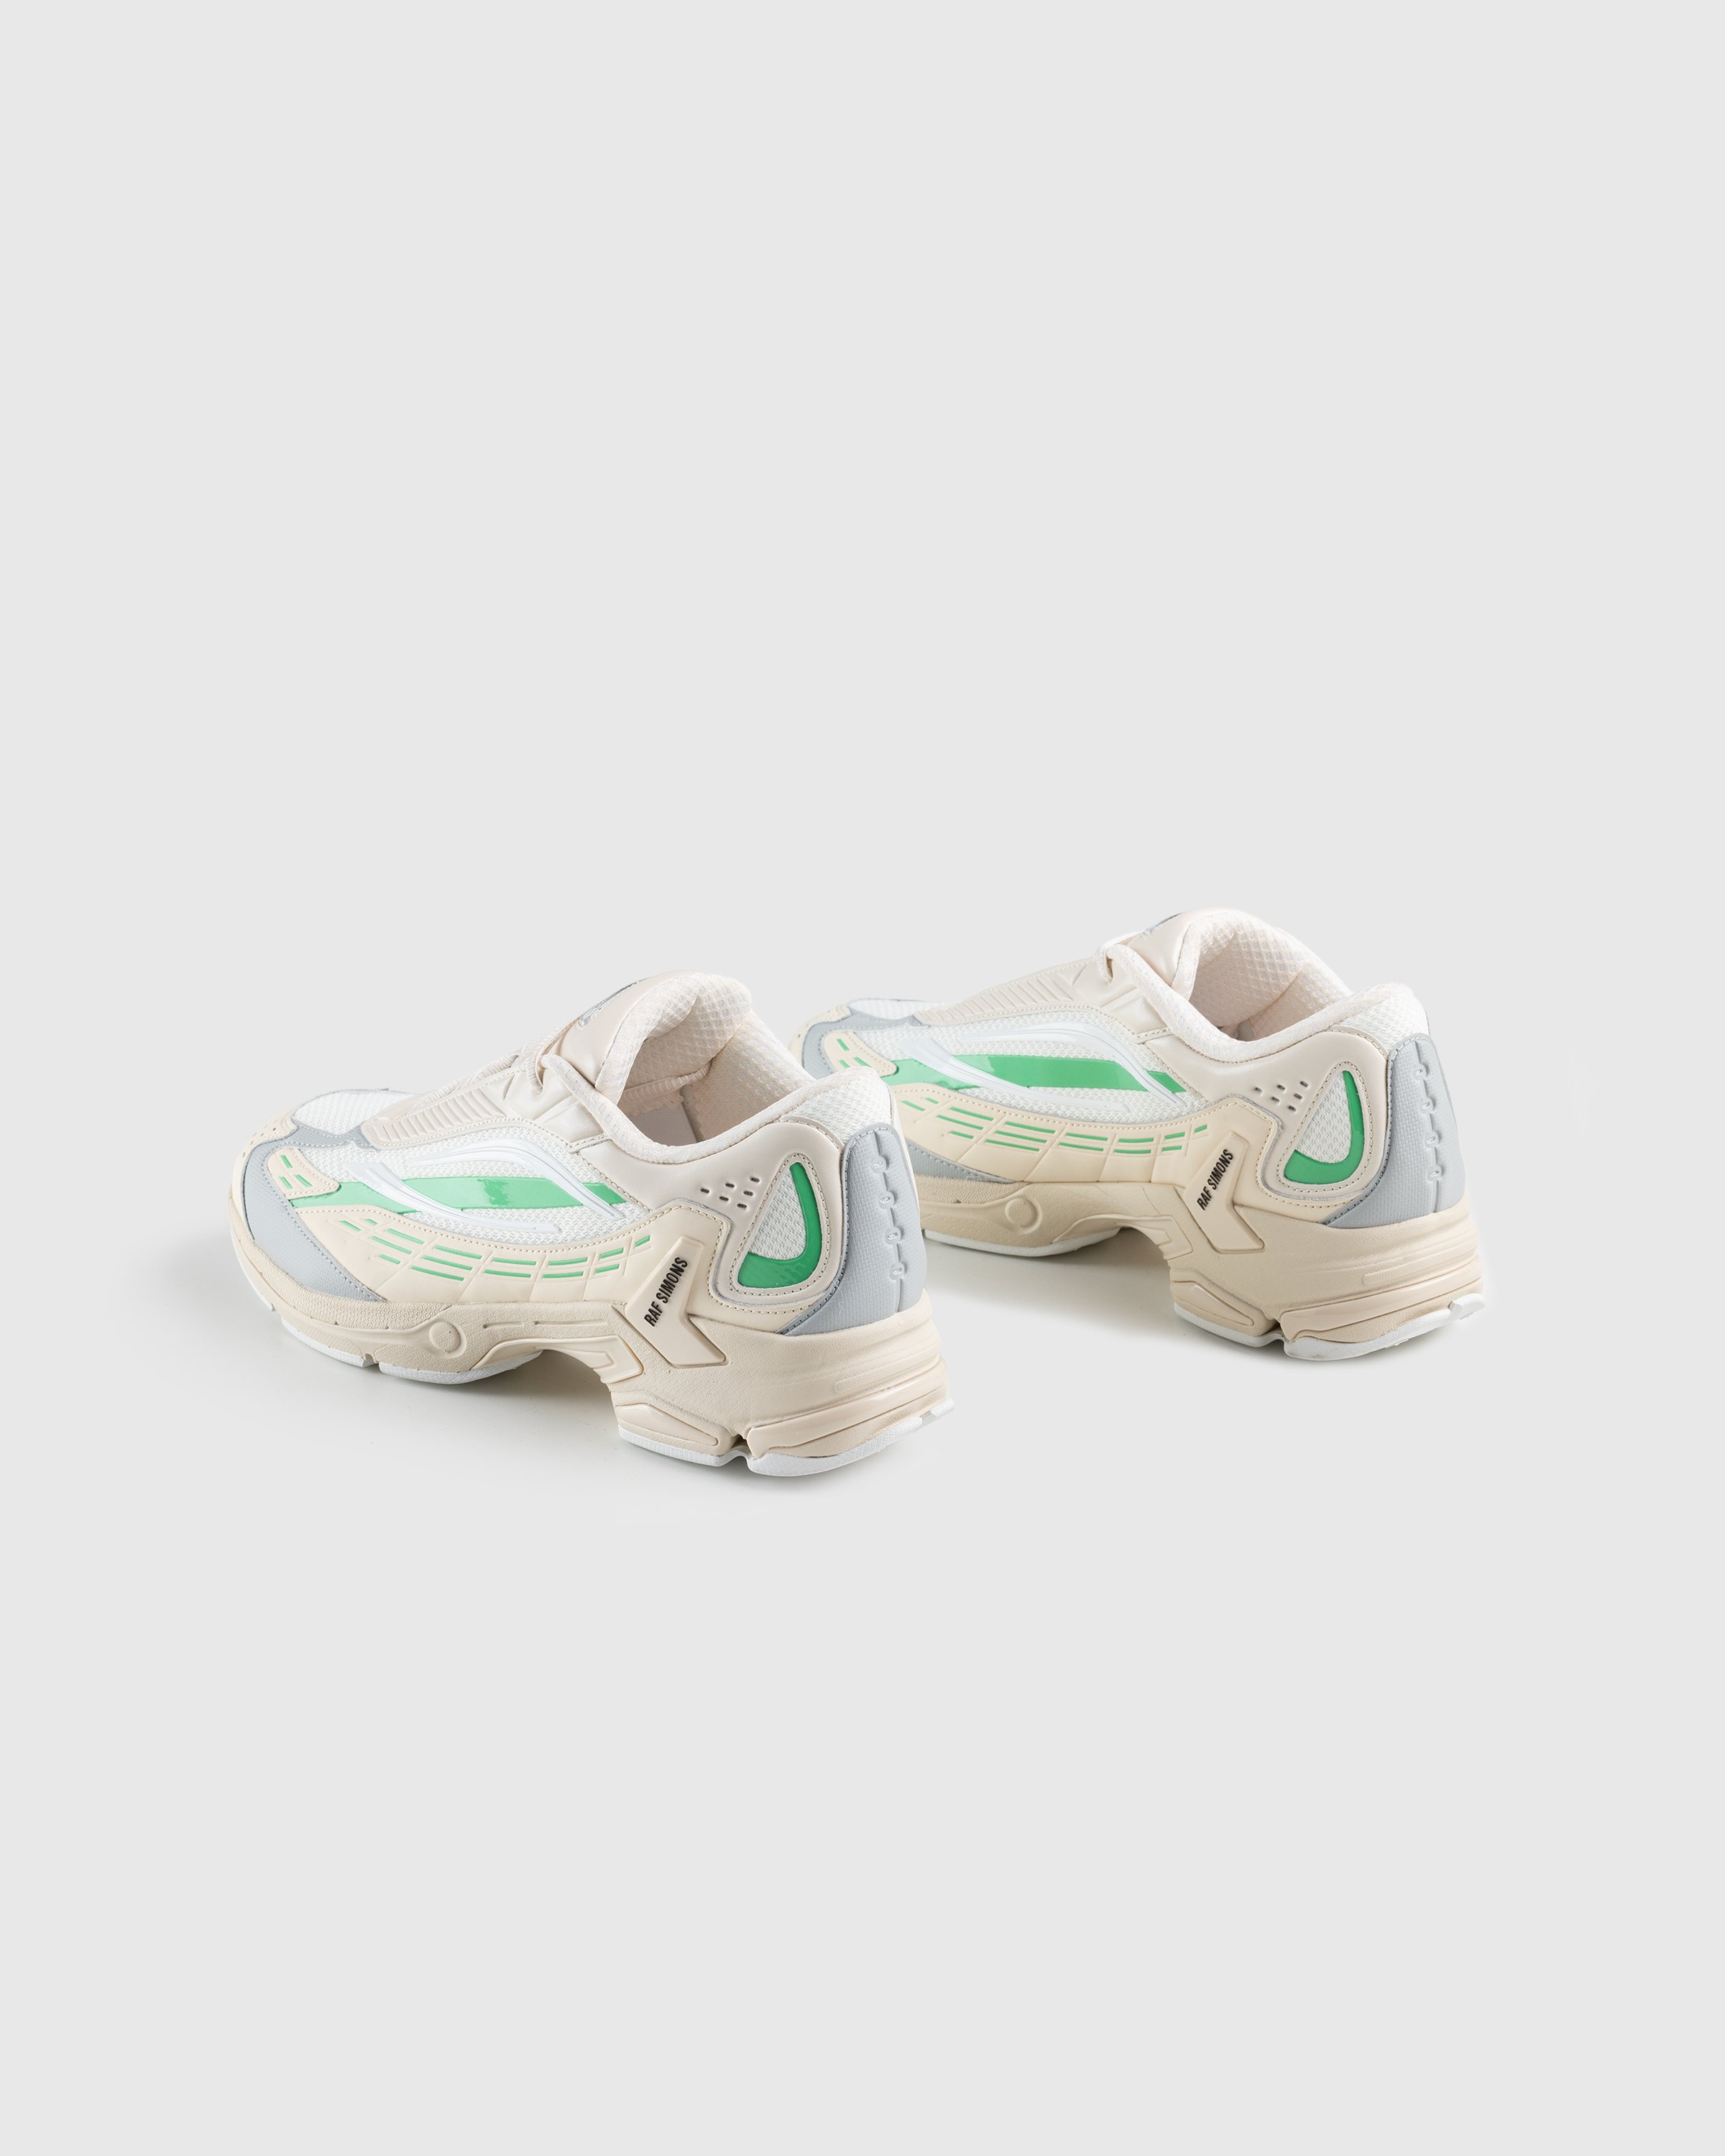 Raf Simons - Ultrasceptre Green - Footwear - Green - Image 4